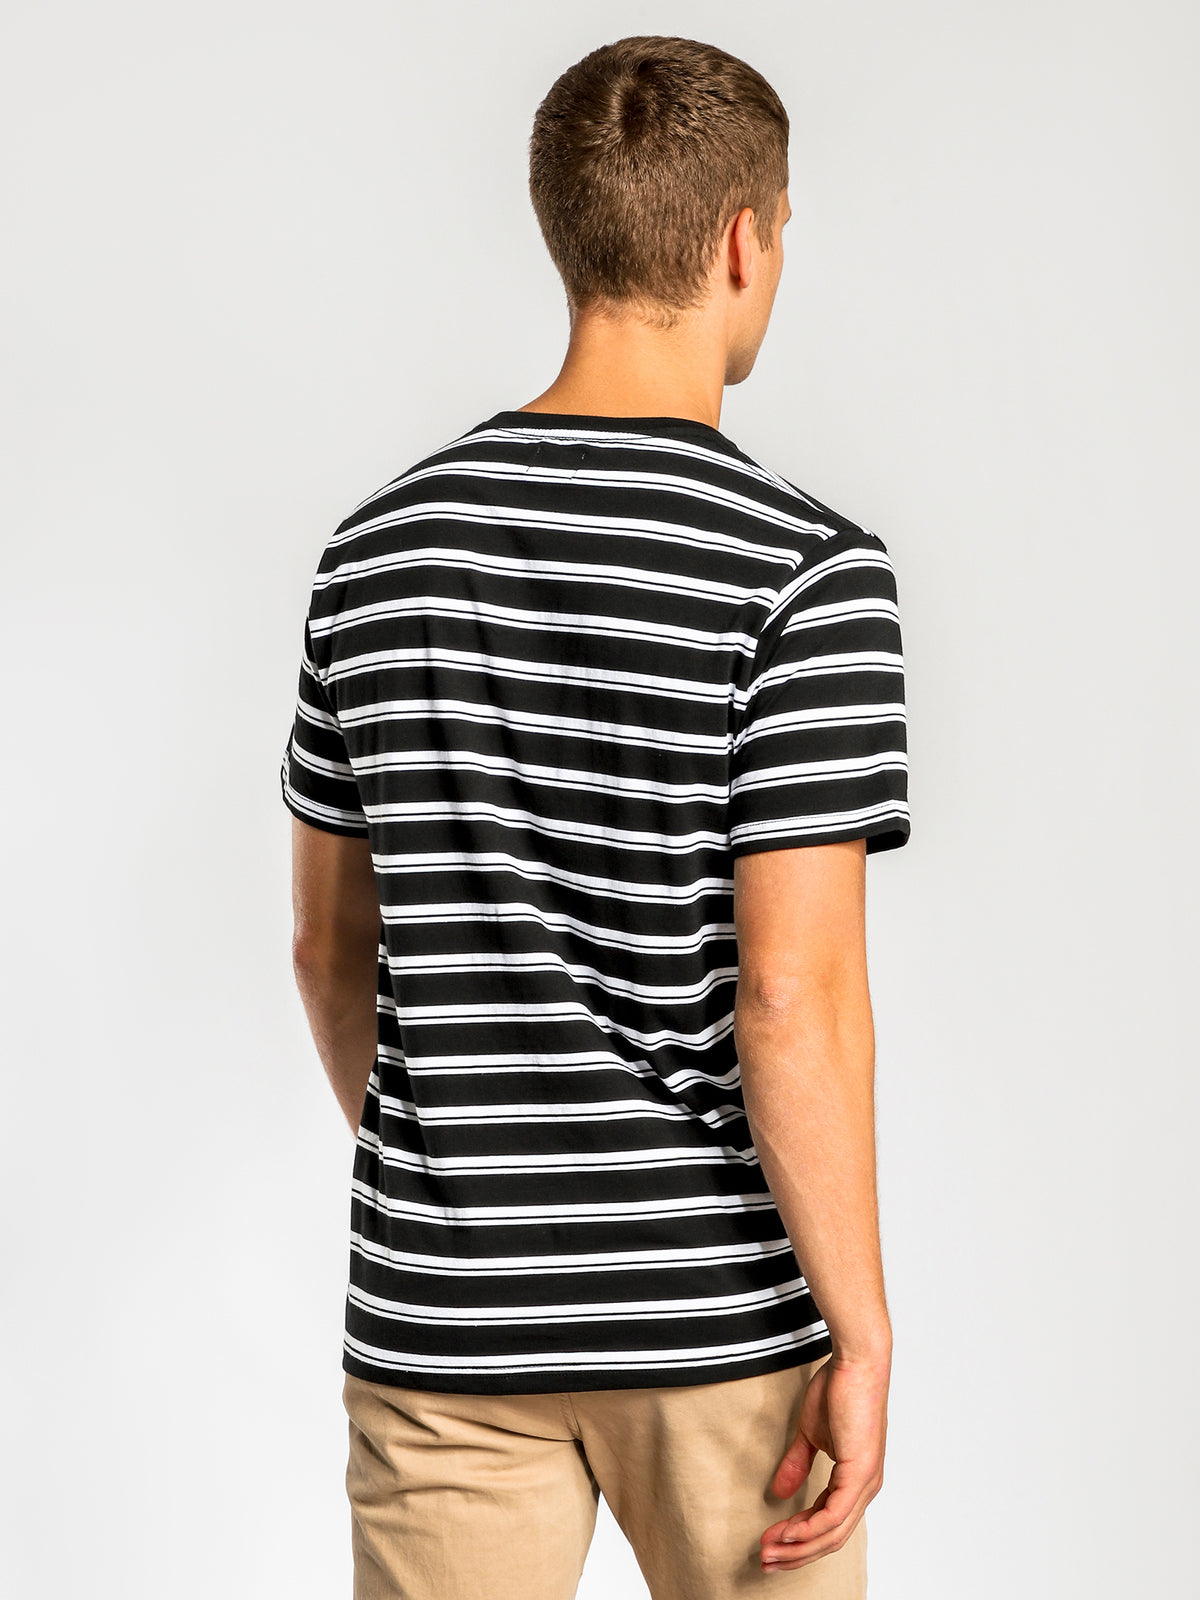 Cayo Short Sleeve T-Shirt in Black &amp; White Stripe